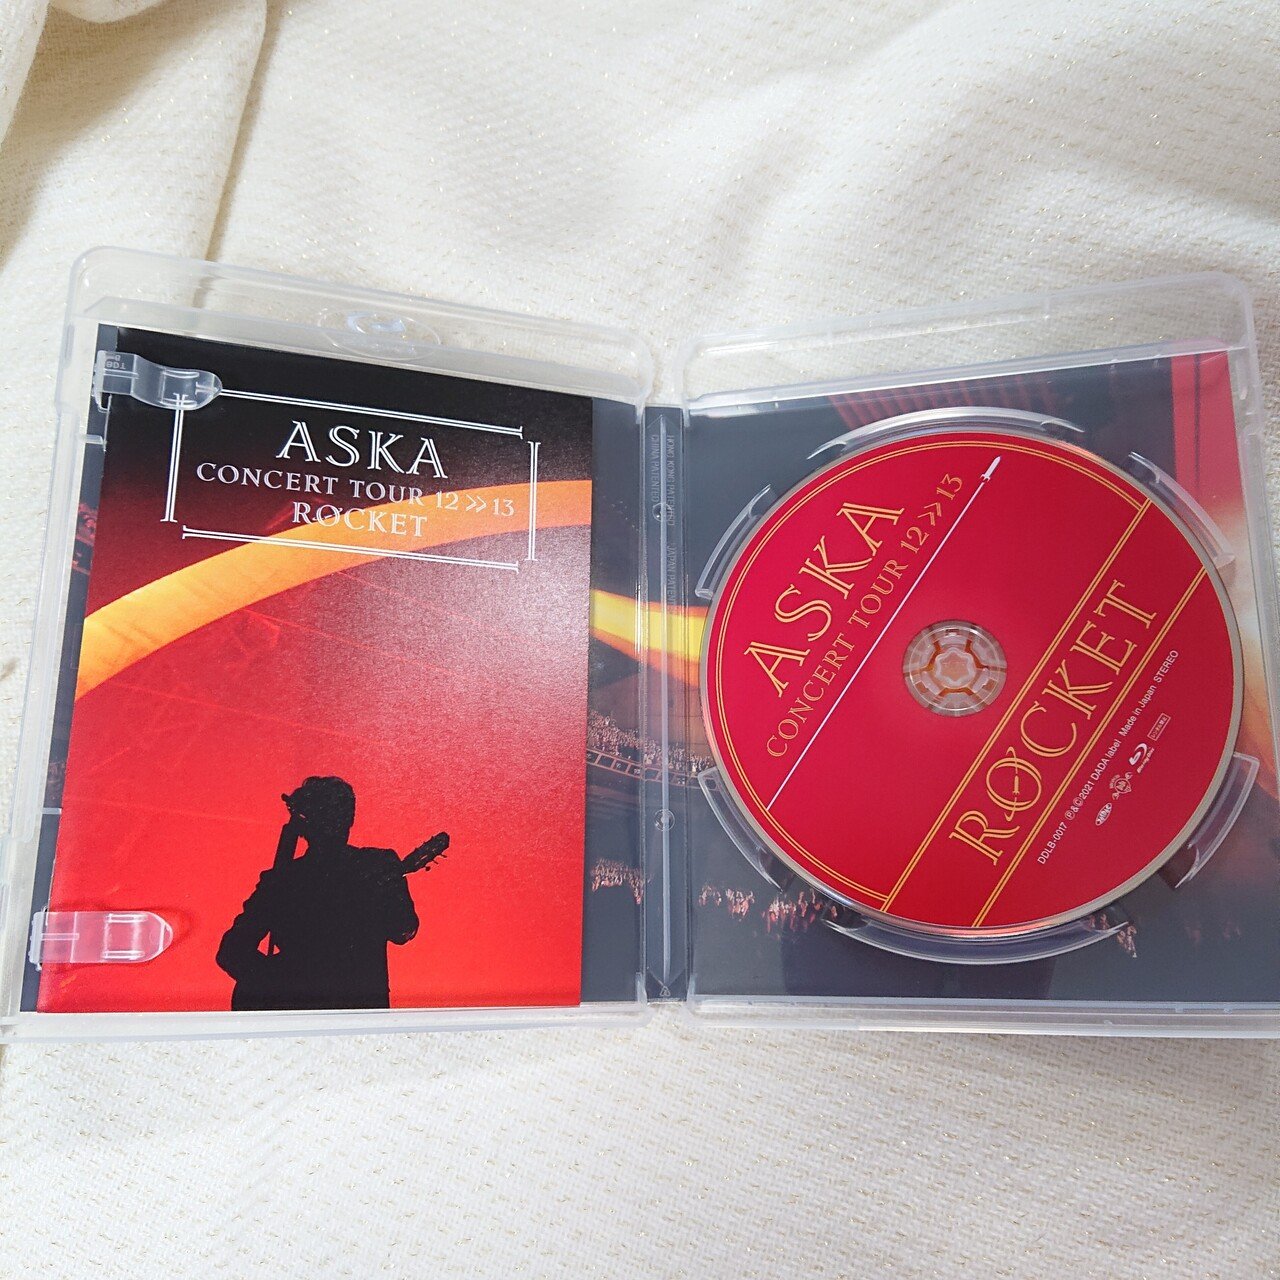 ASKA CONCERT TOUR 12～13 ROCKET』Blu-ray回収交換の詳細発表あり 